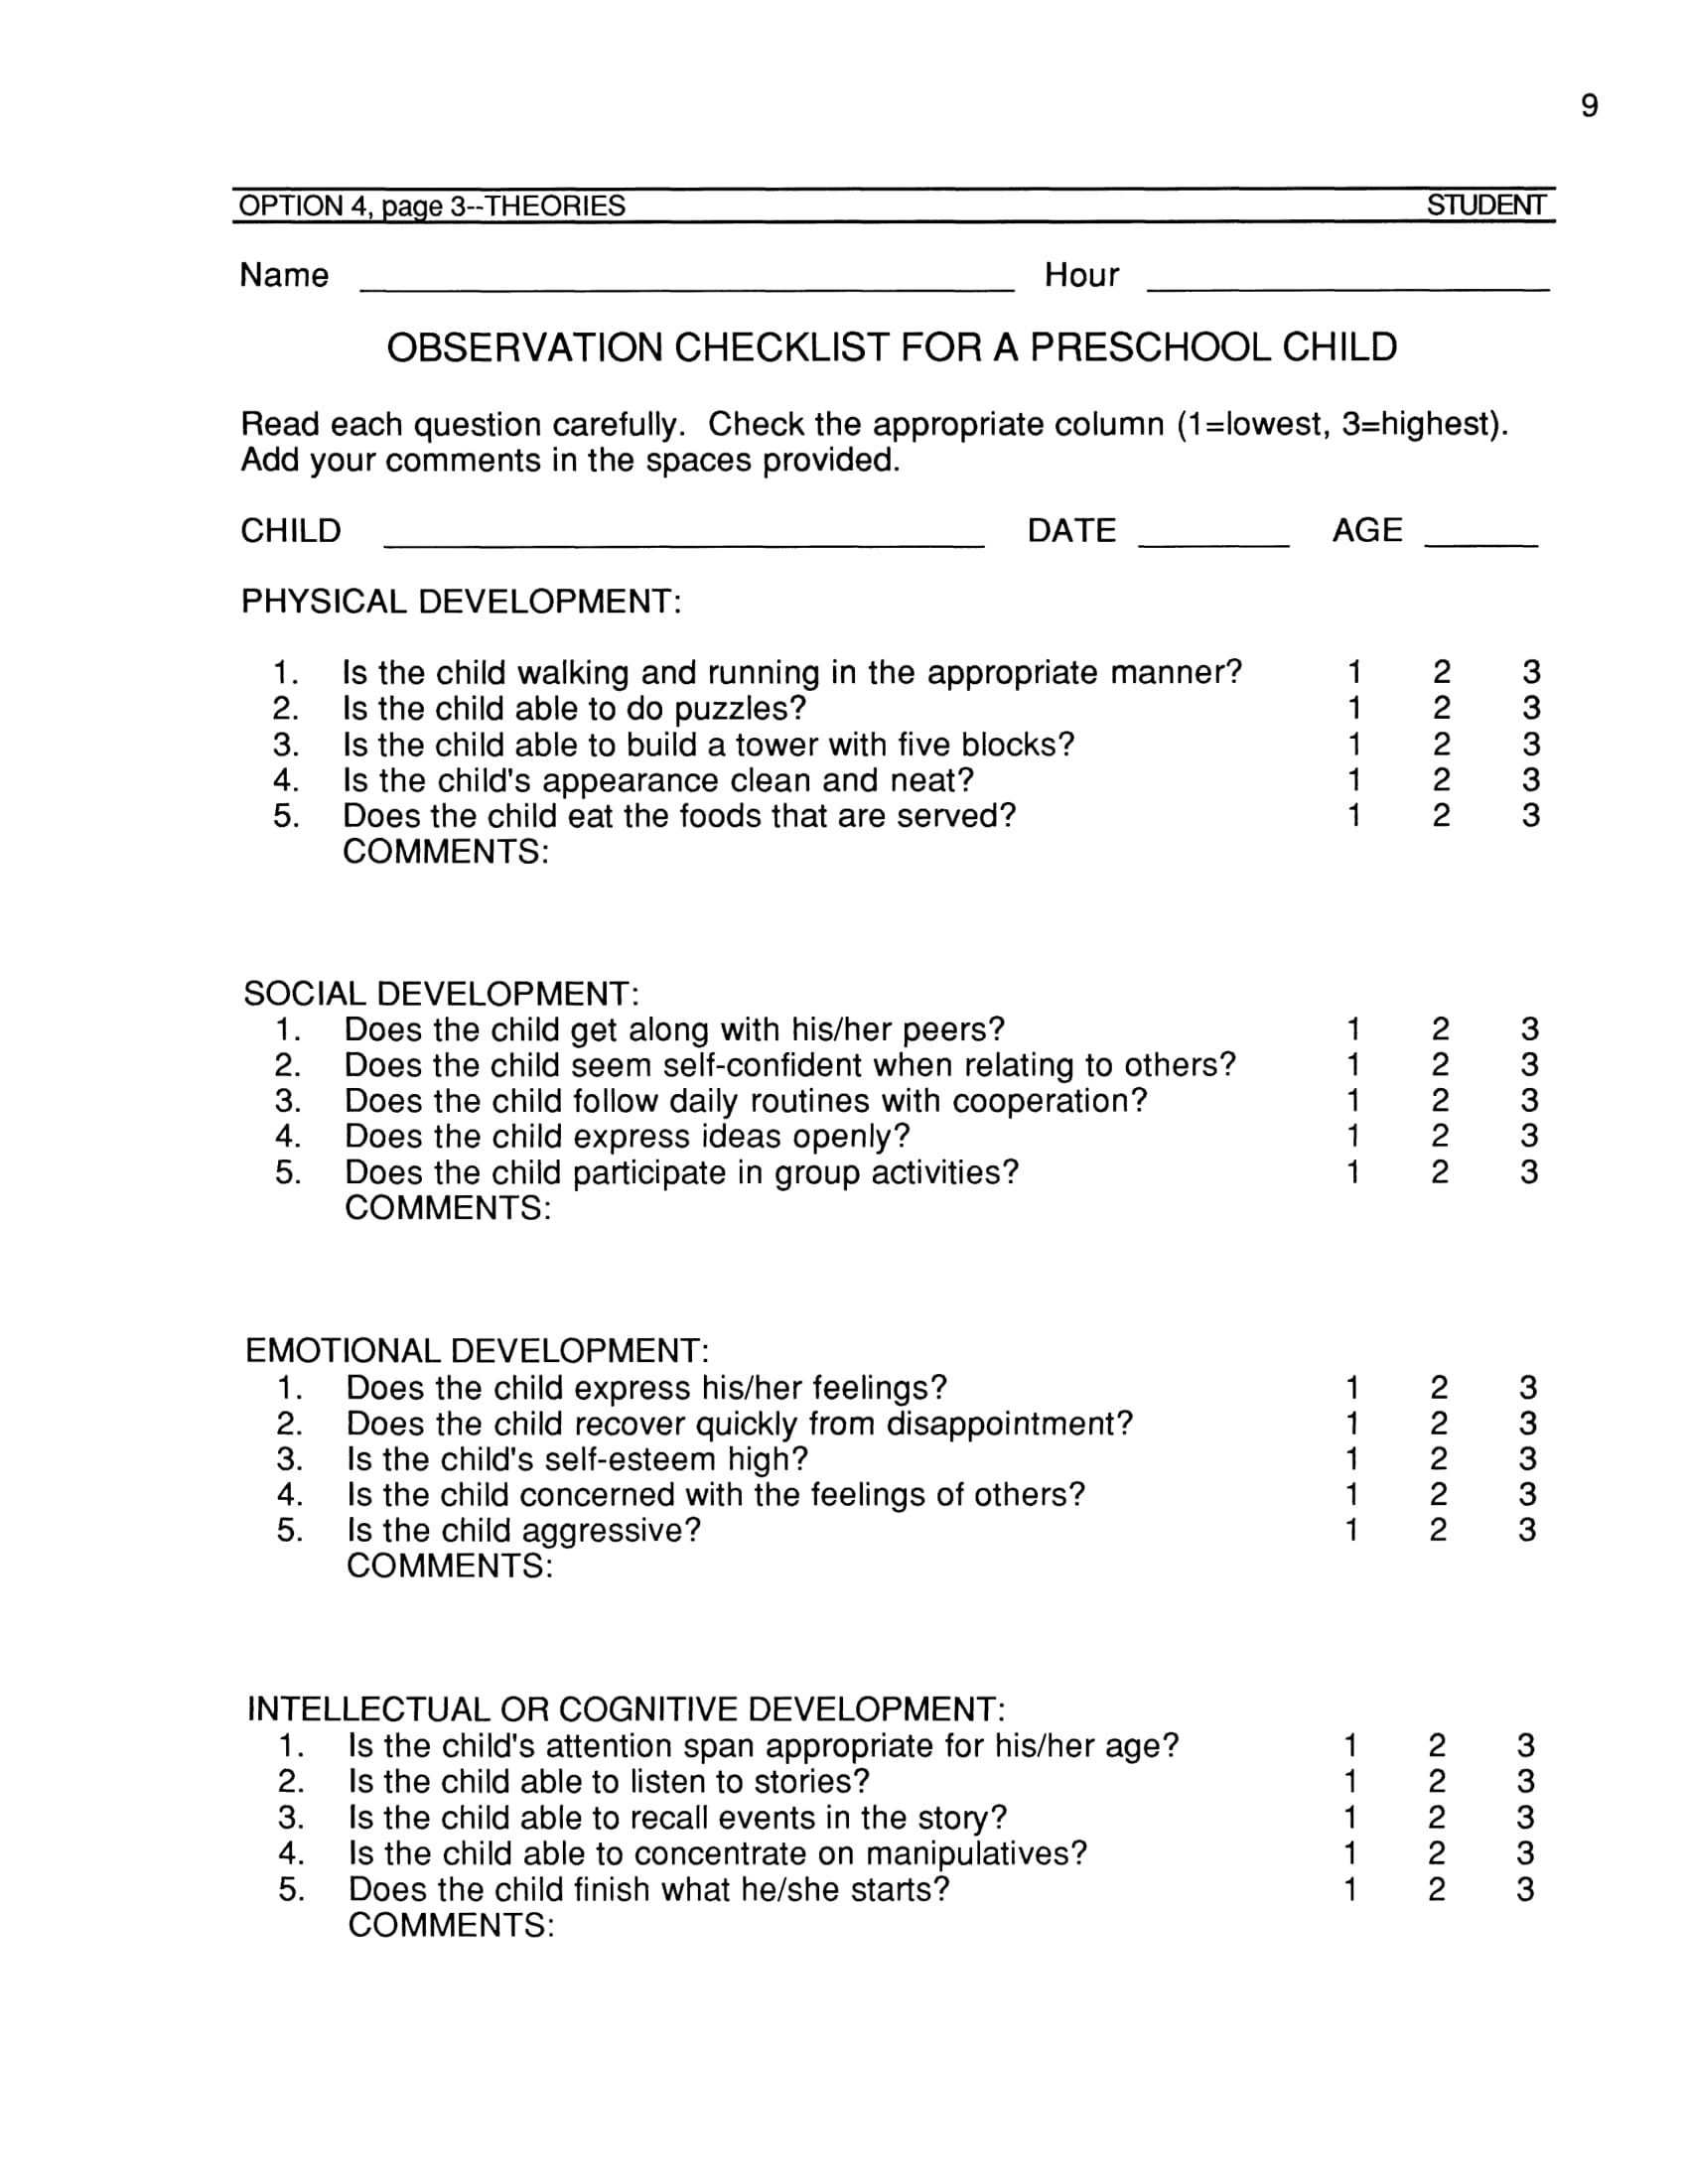 preschool child observation checklist form 1